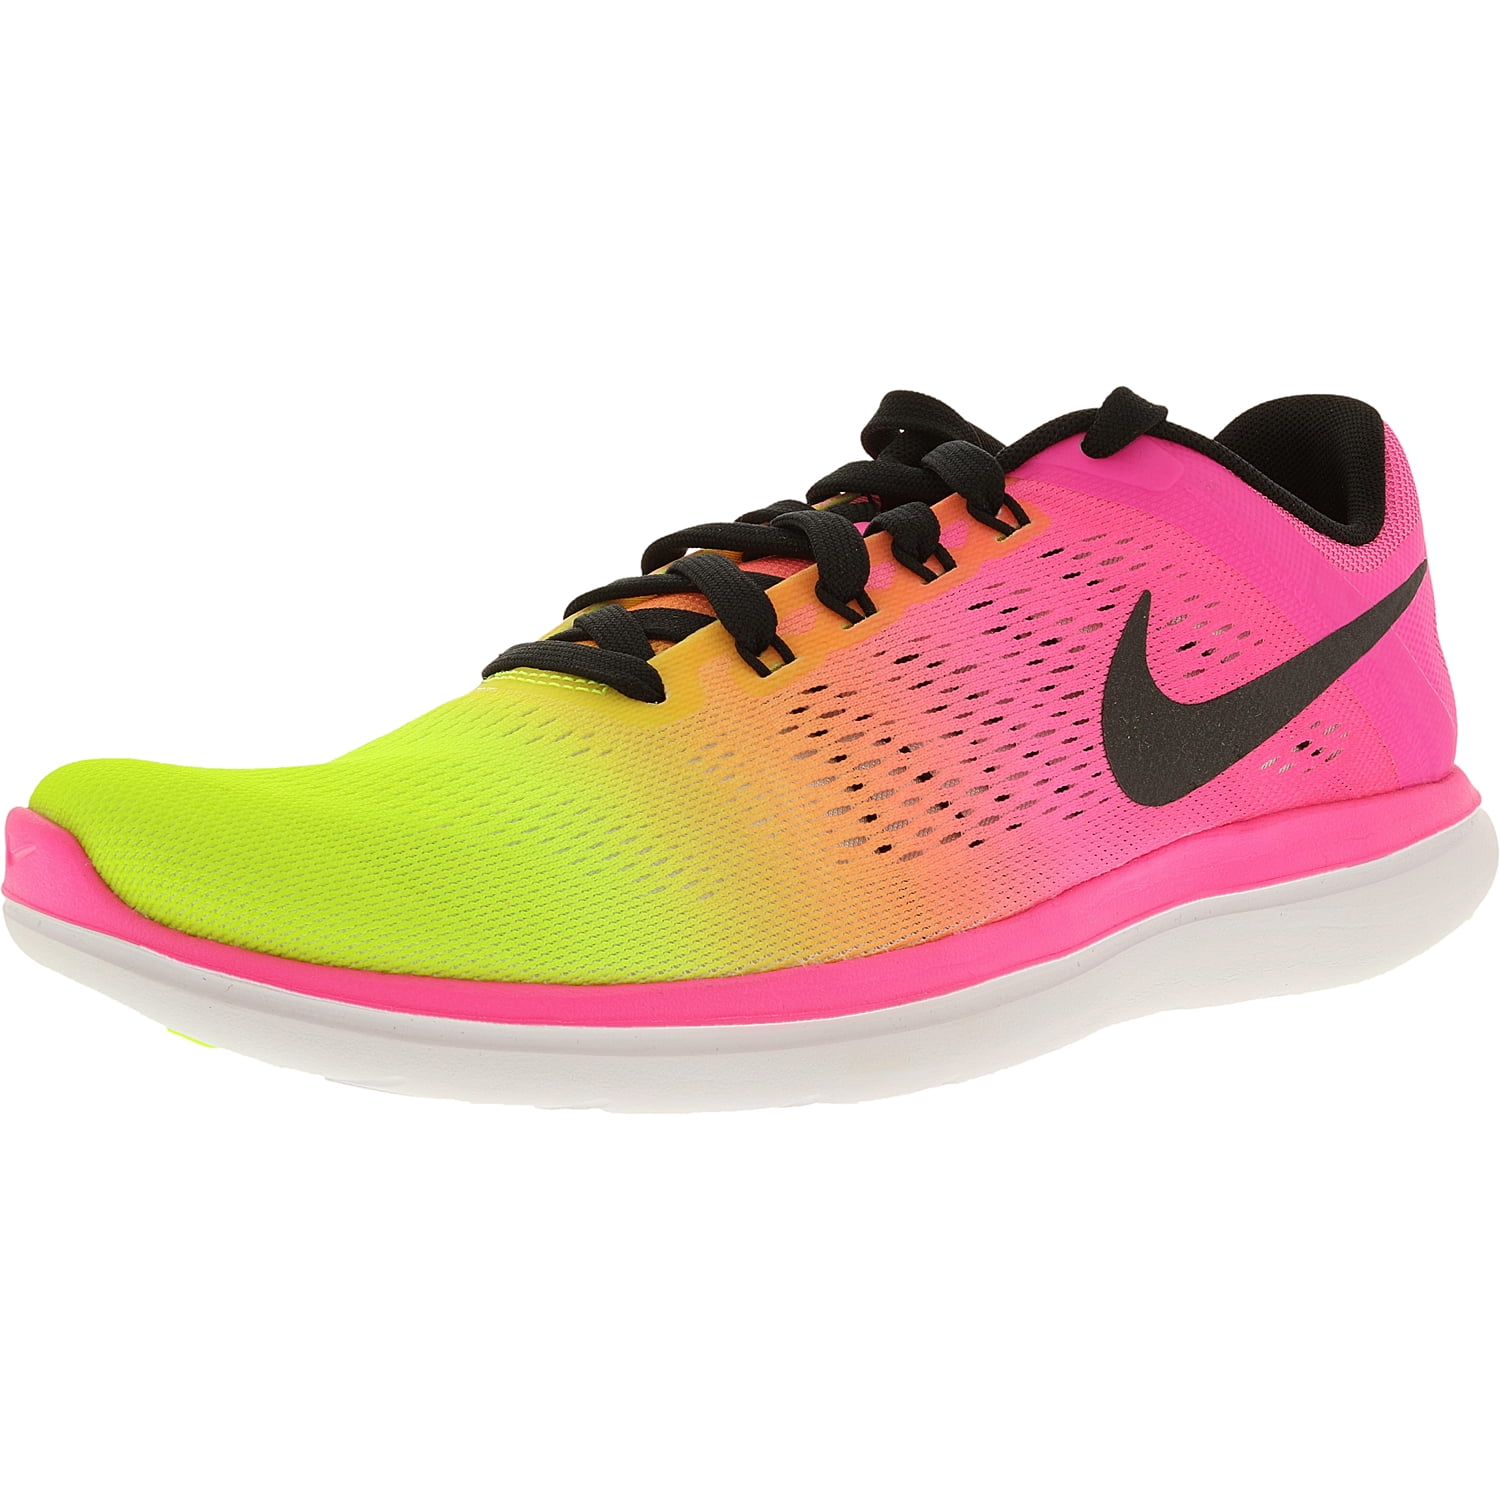 Nike Men's Flex 2016 Rn Oc Multi-Color/Multi-Color Ankle-High Mesh Cross Shoe - -